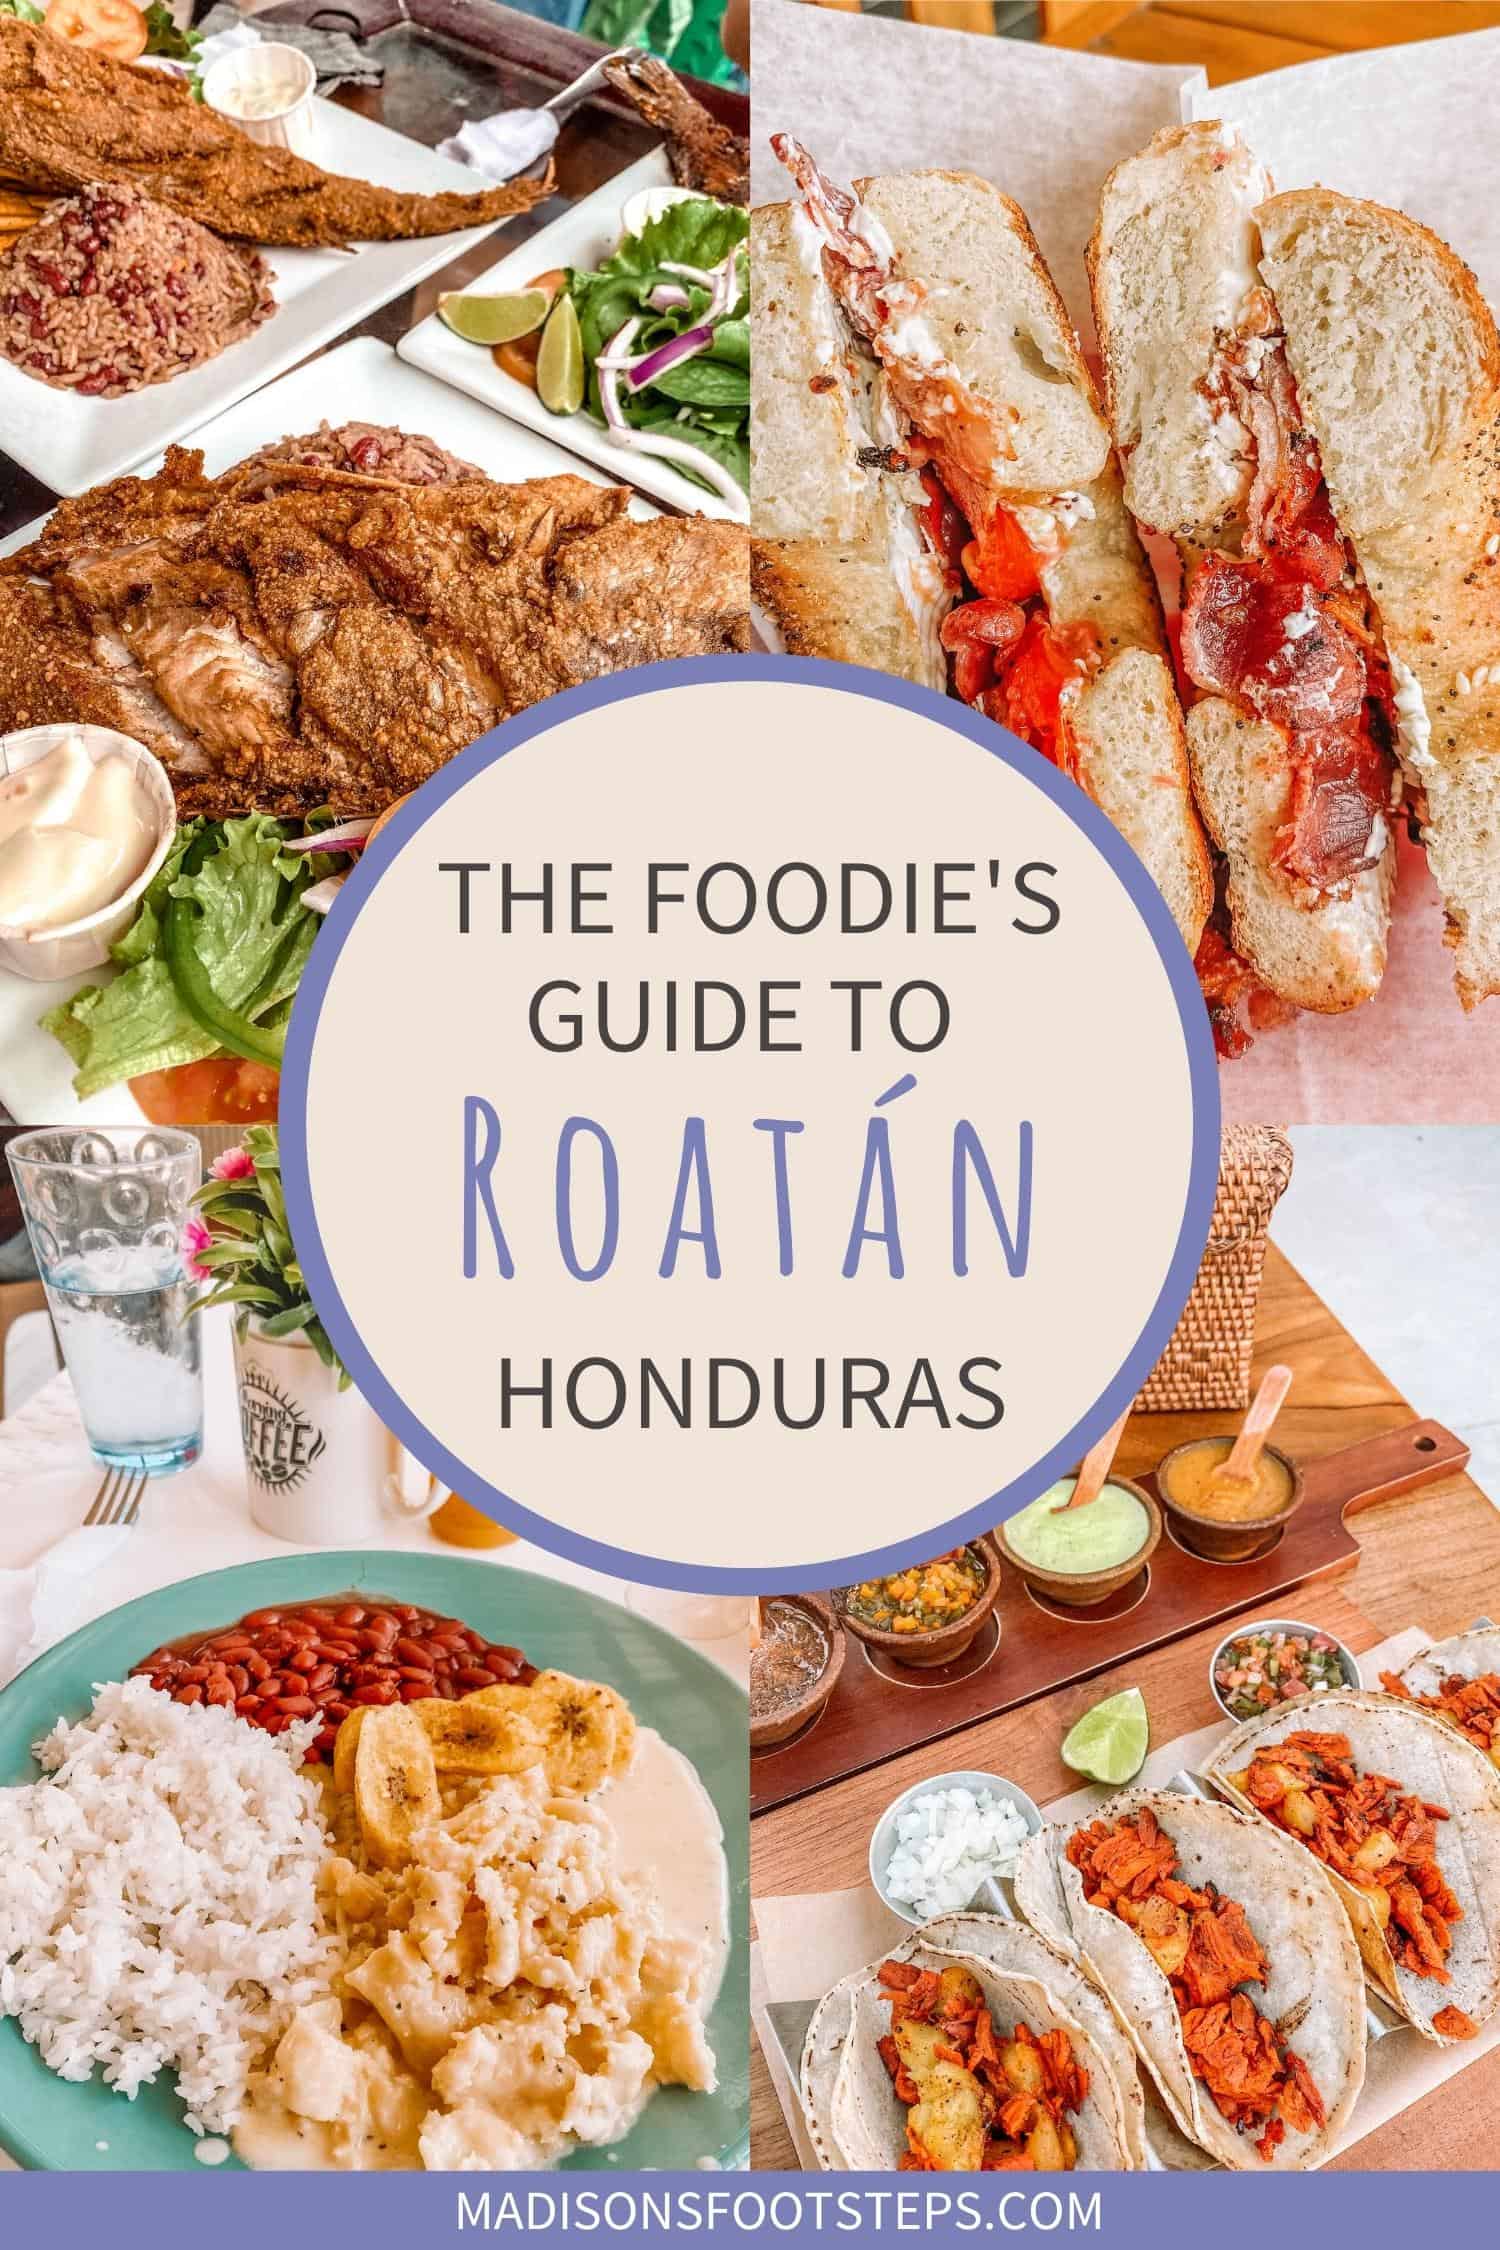 Best restaurants in Roatan pin